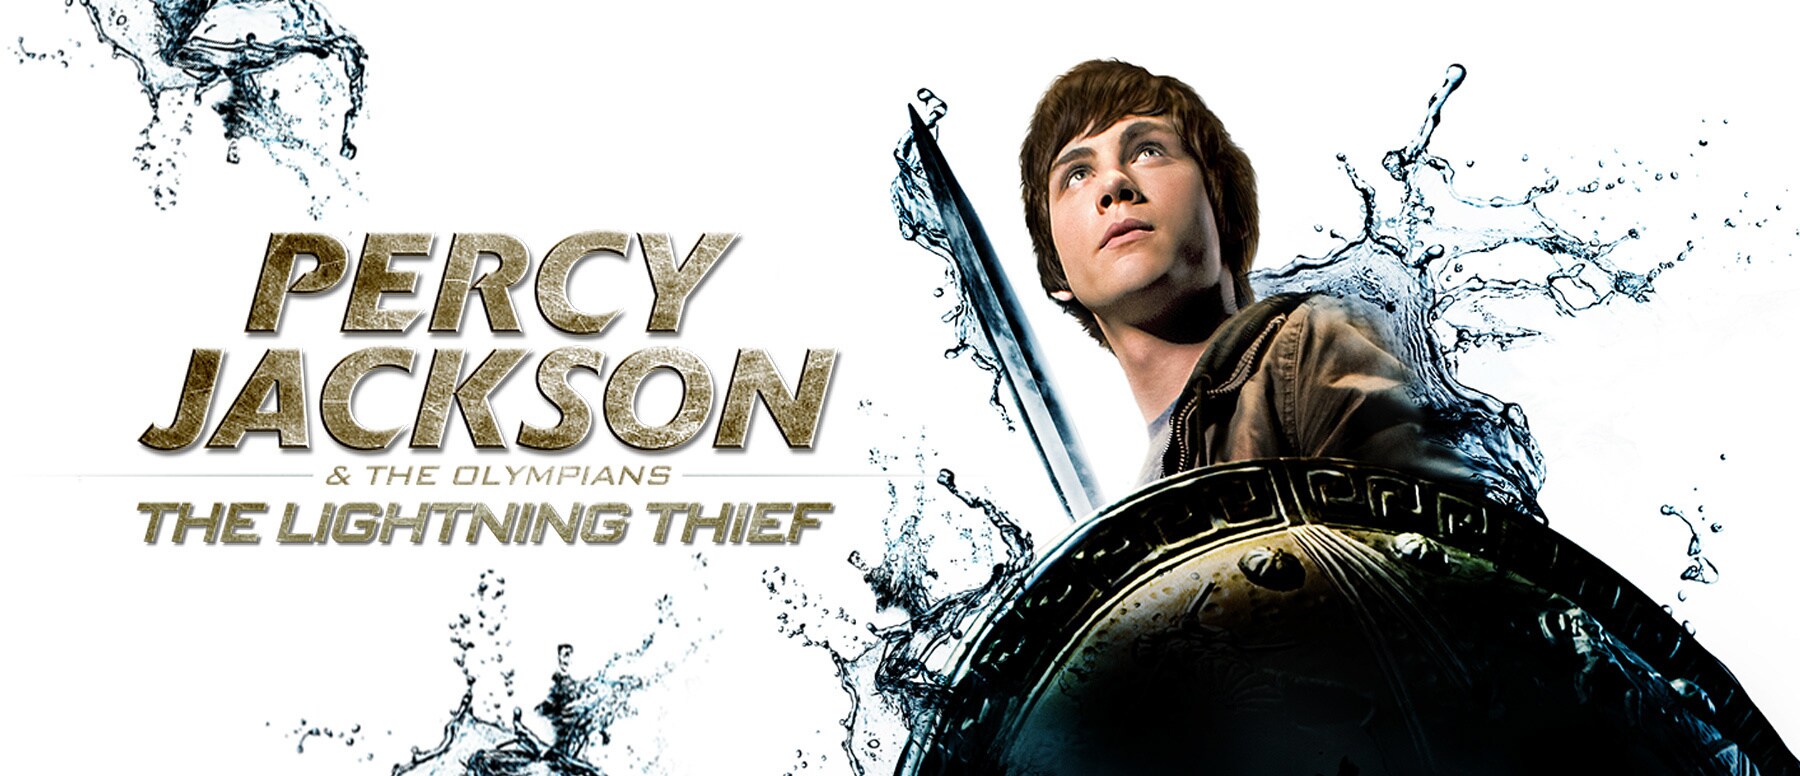 Percy Jackson & the Olympians: The Lightning Thief Hero